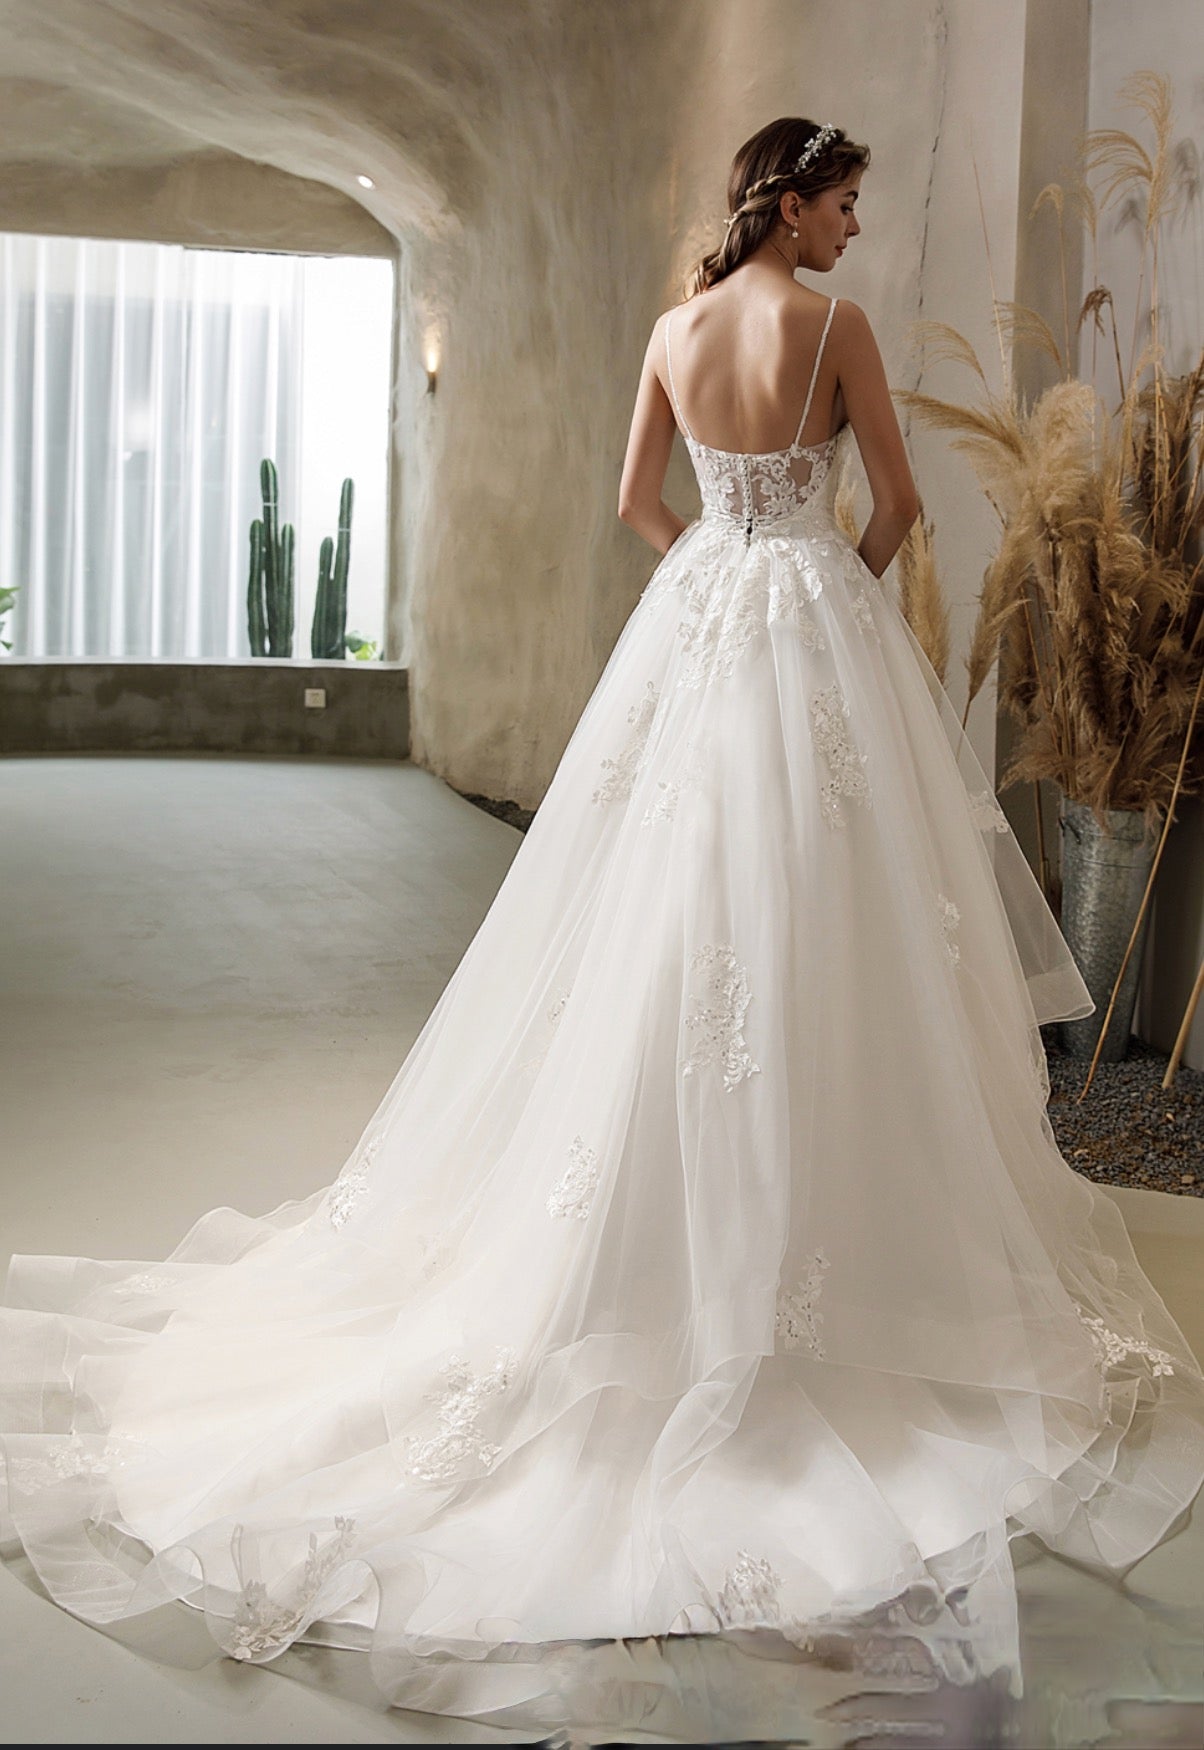 floral lace wedding dress